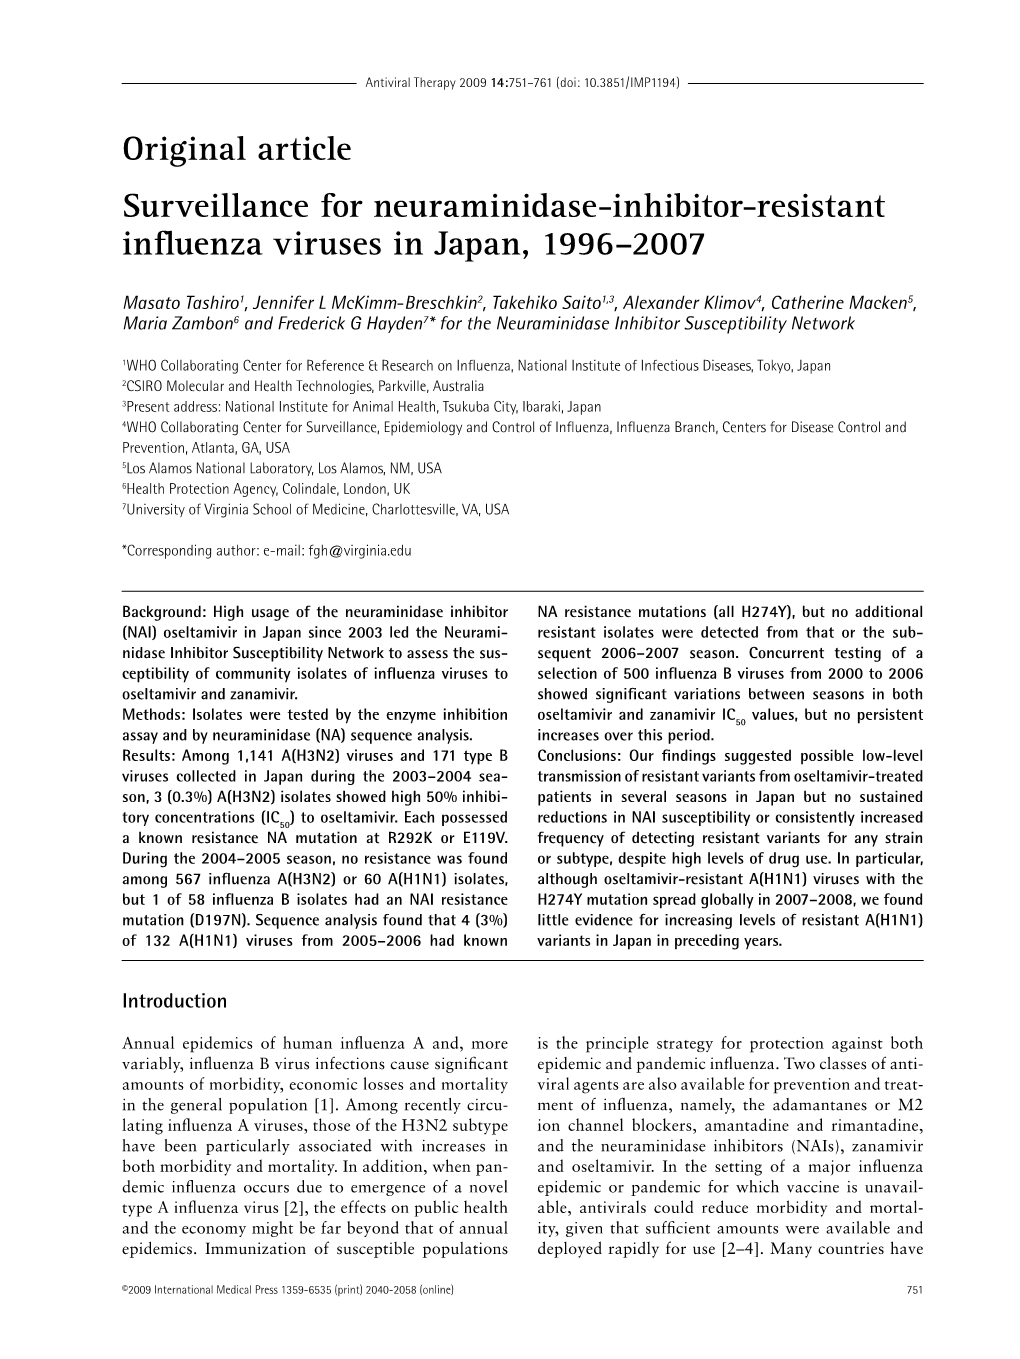 Original Article Surveillance for Neuraminidase-Inhibitor-Resistant Influenza Viruses in Japan, 1996–2007